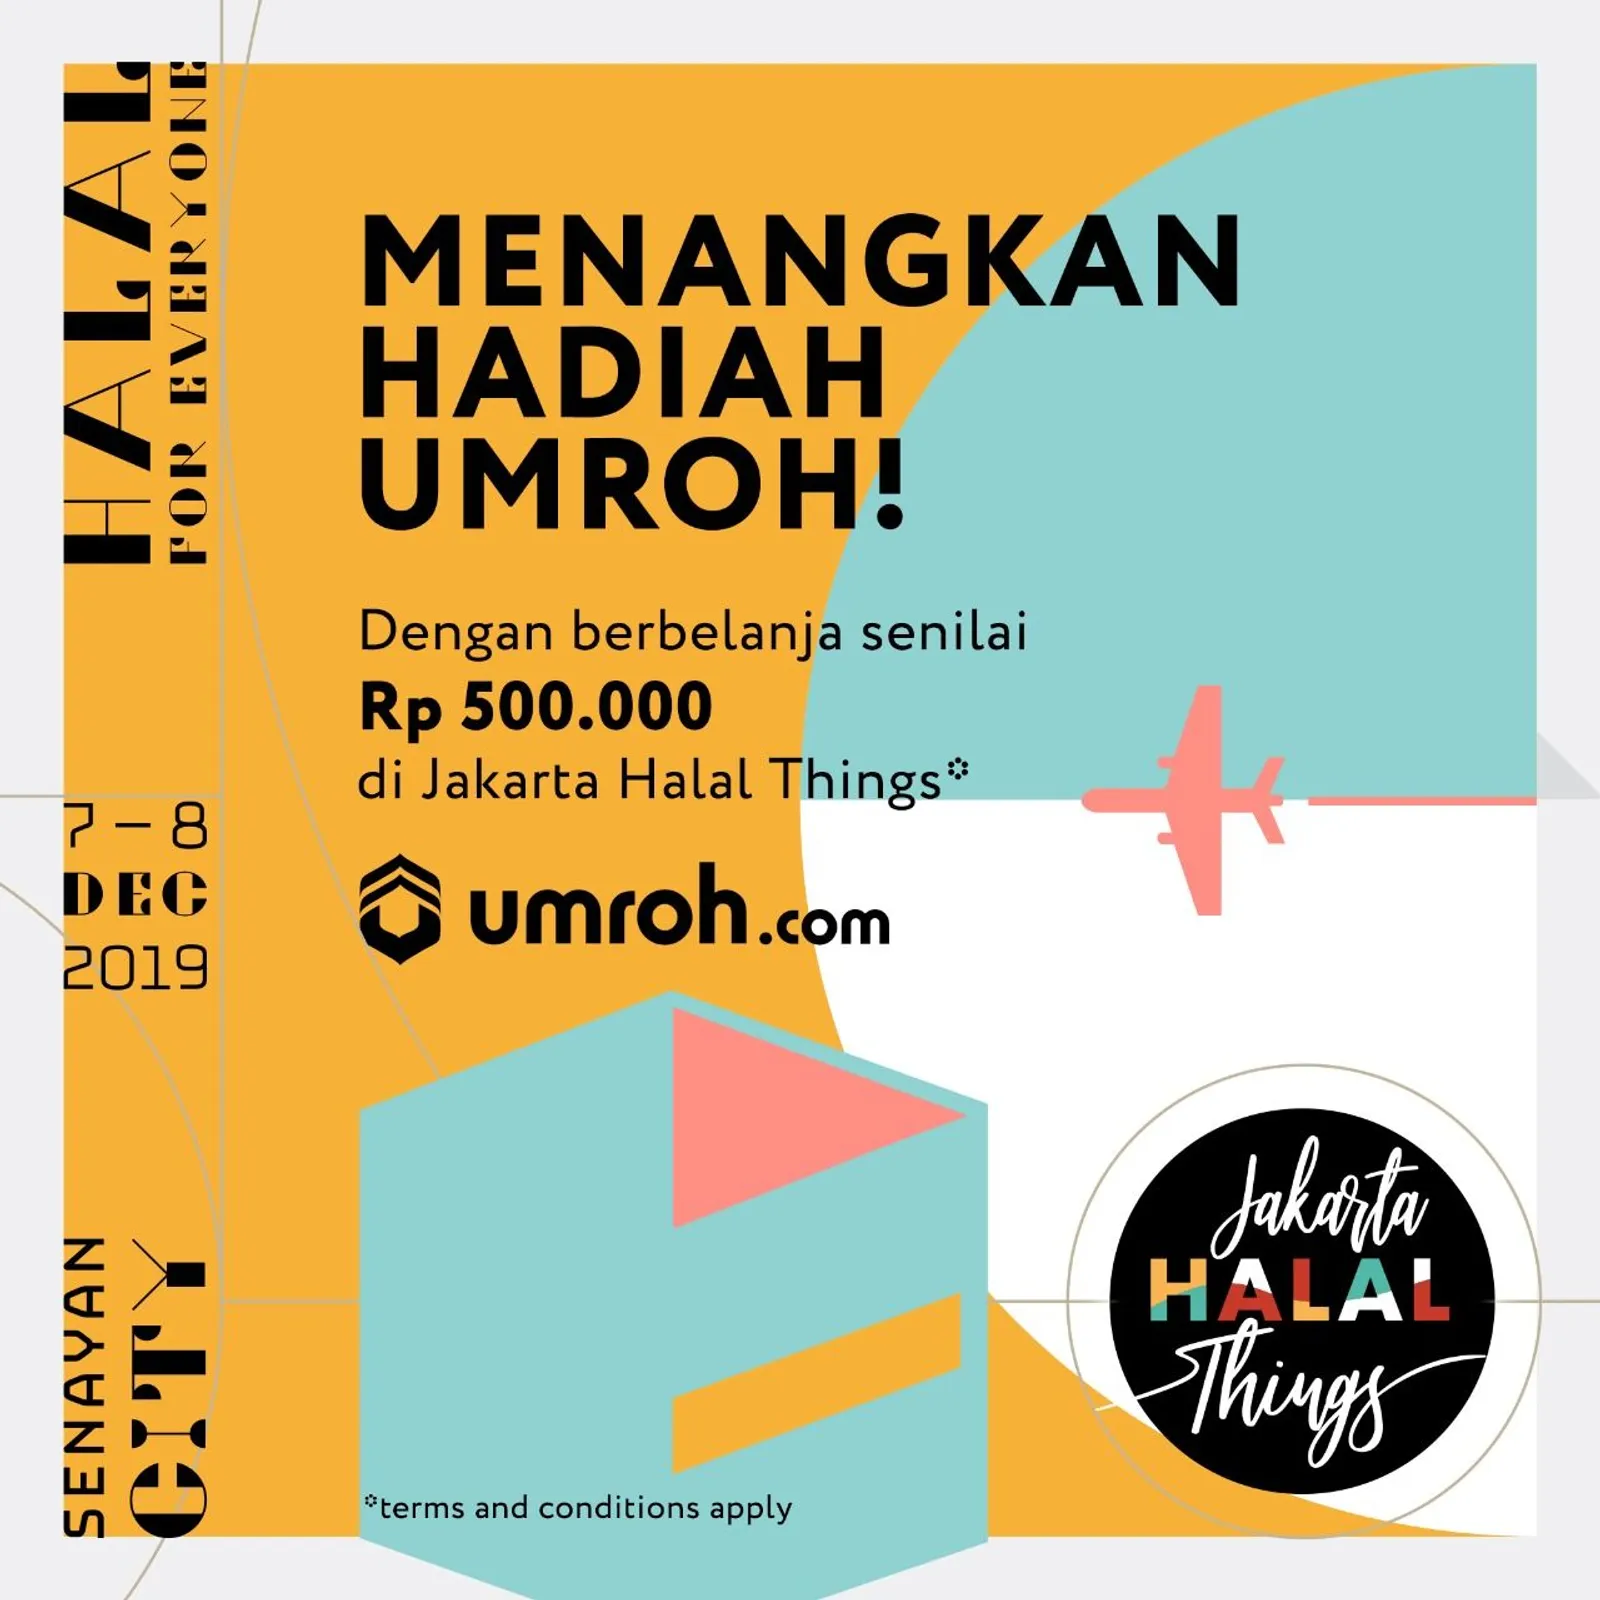 Jakarta Halal Things 2019, Membawa Gaya Hidup Halal untuk Semua